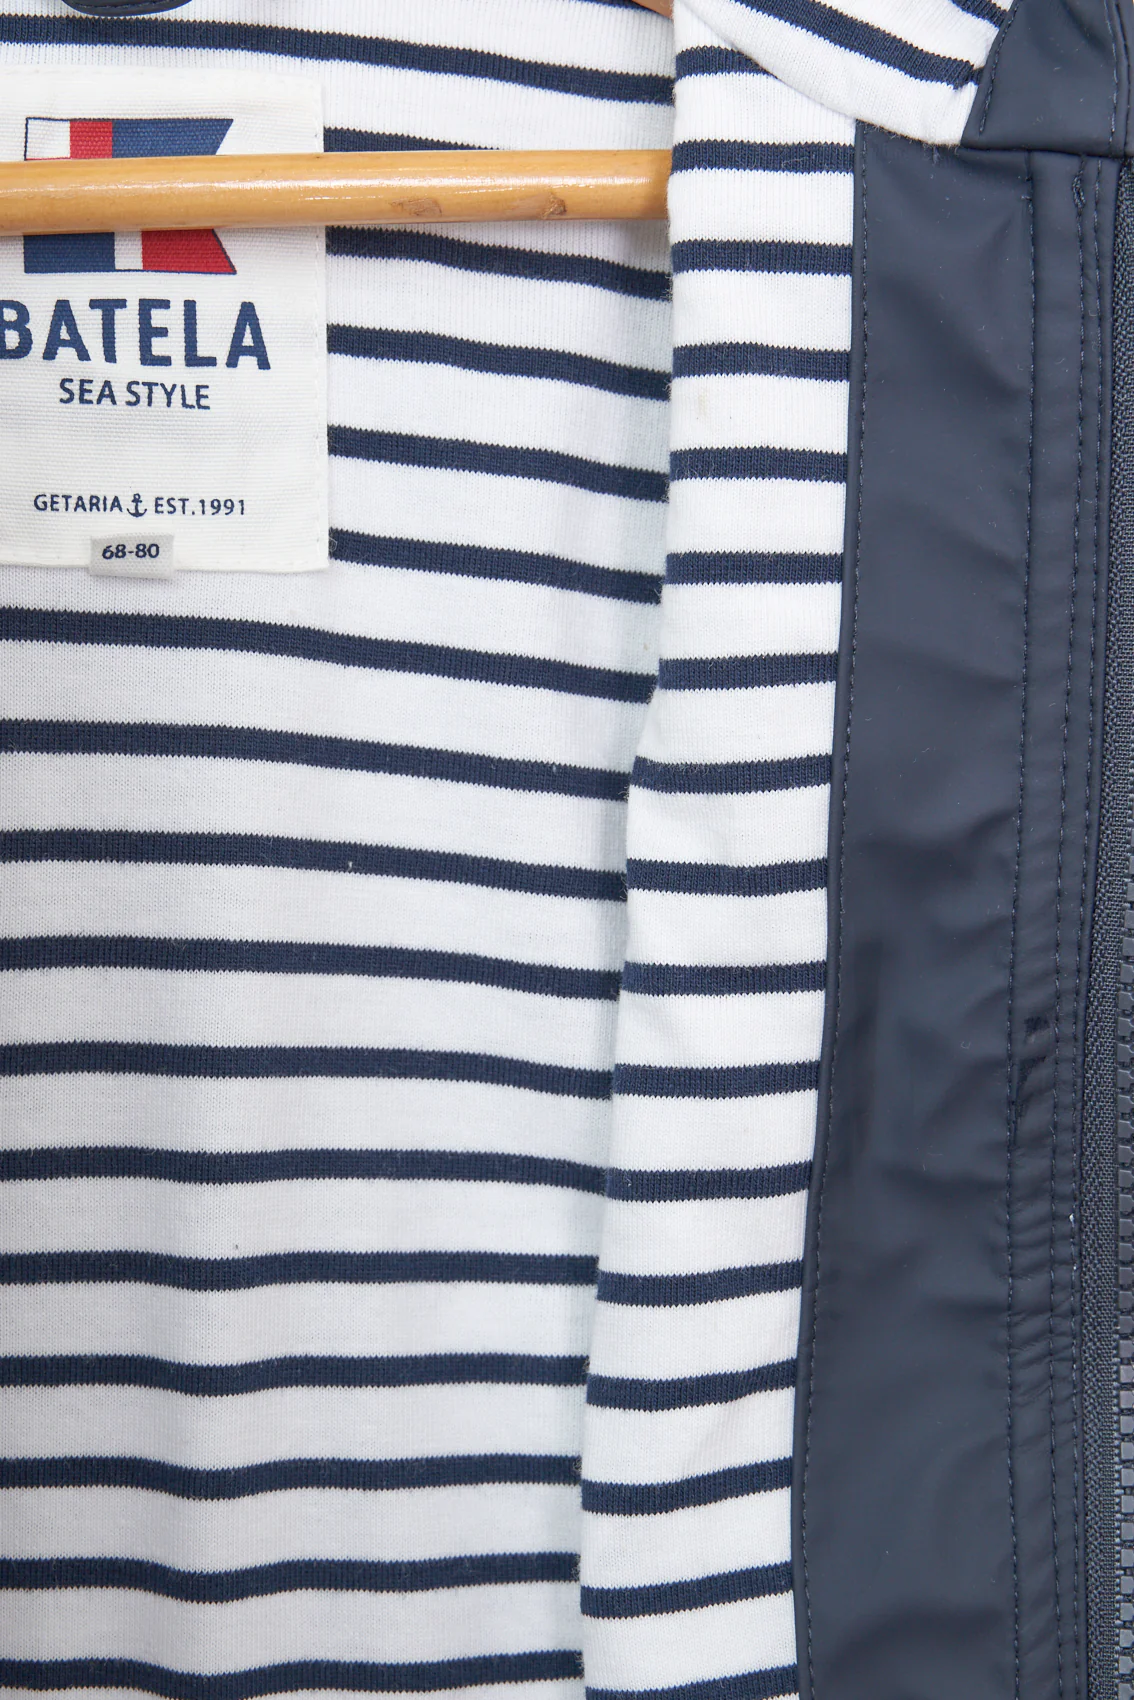 Batela Rain Jacket - Navy with Seagull Print 12-18months